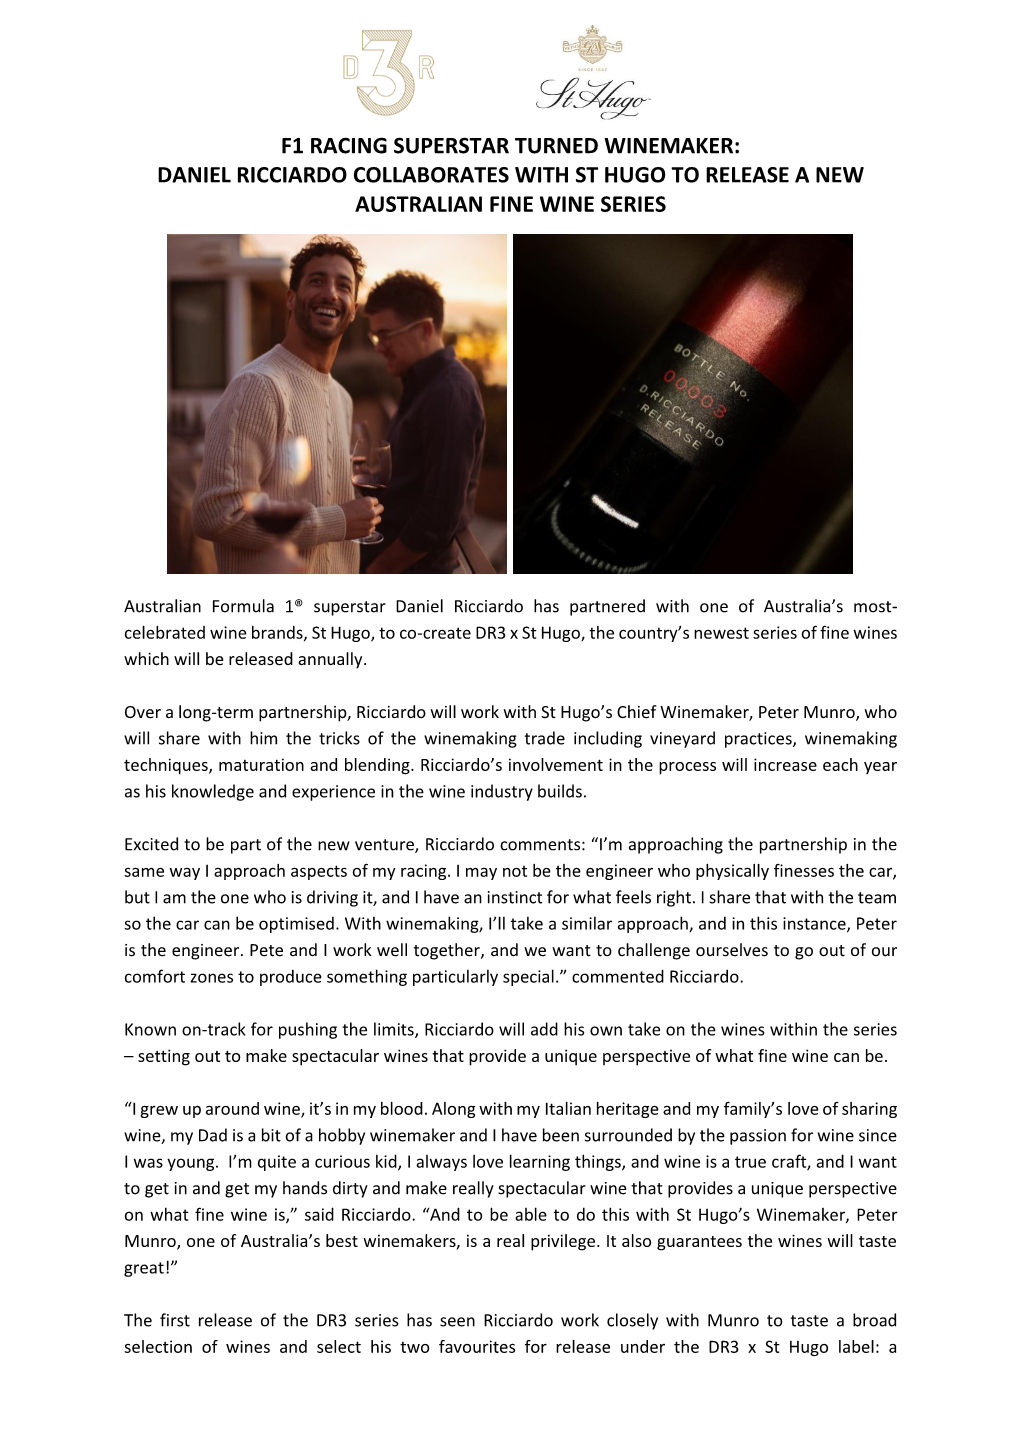 F1 Racing Superstar Turned Winemaker: Daniel Ricciardo Collaborates with St Hugo to Release a New Australian Fine Wine Series